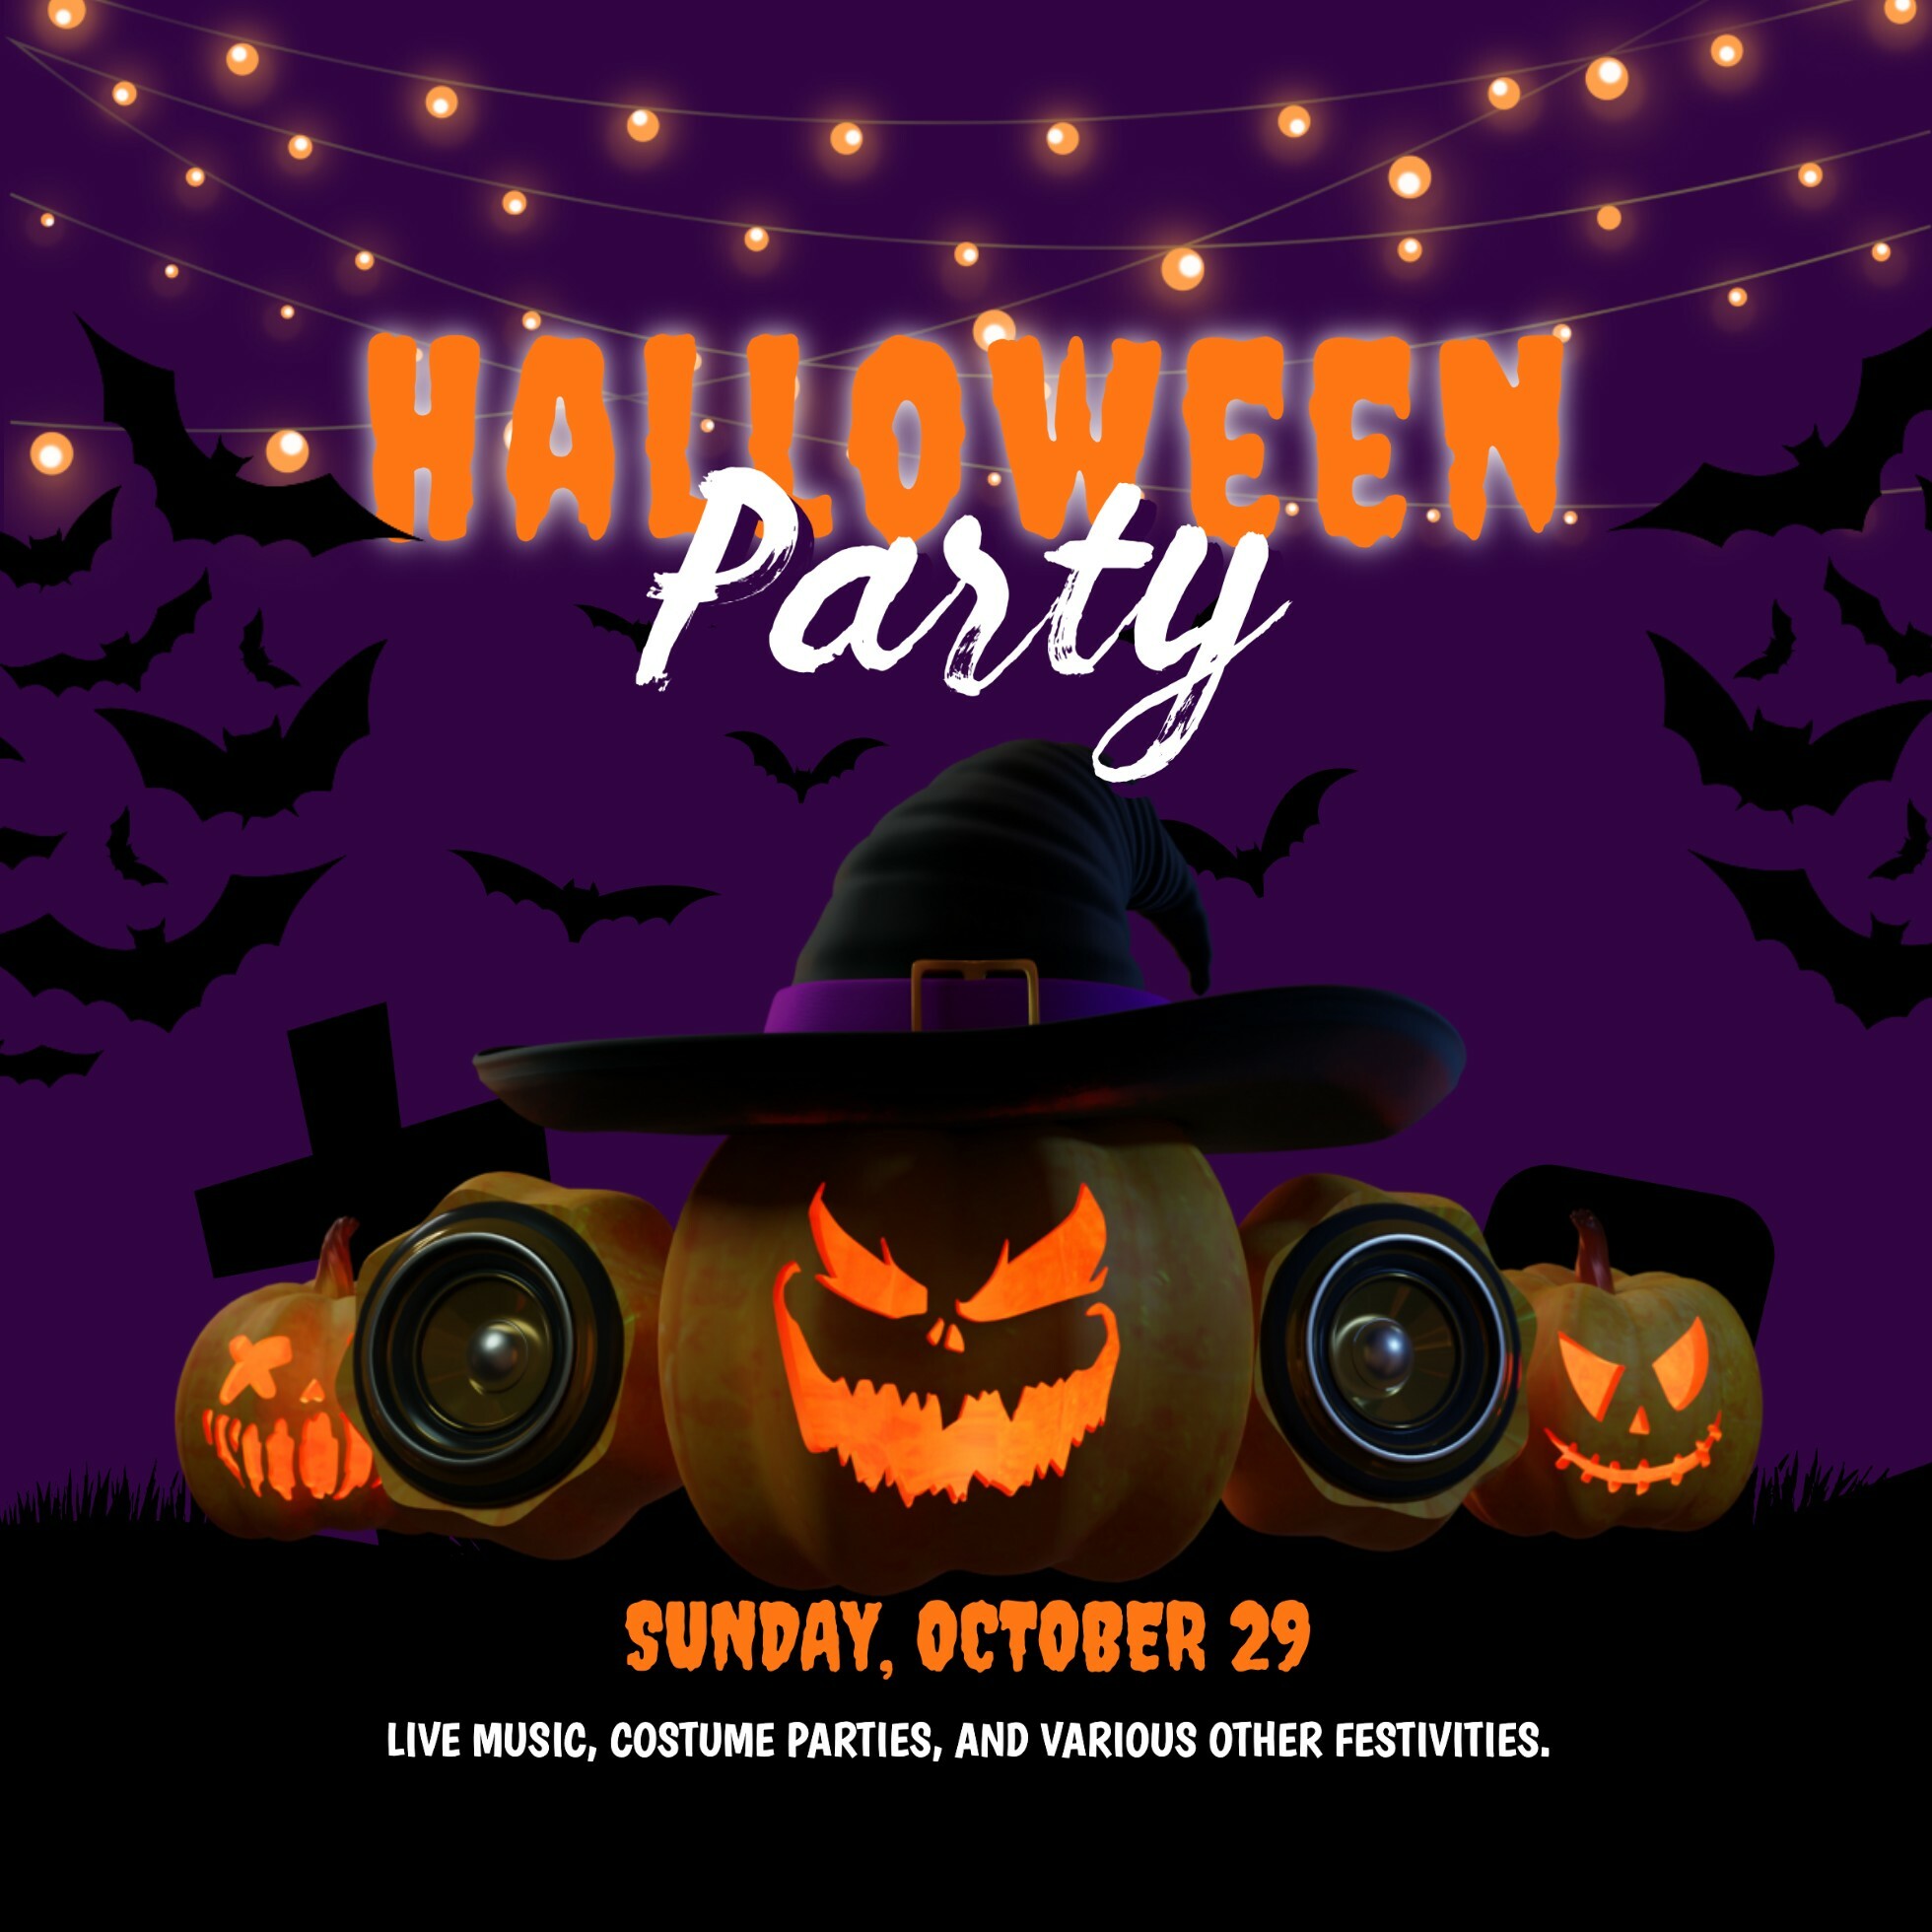 Purple Frightening Halloween Party LinkedIn Post - Revisi